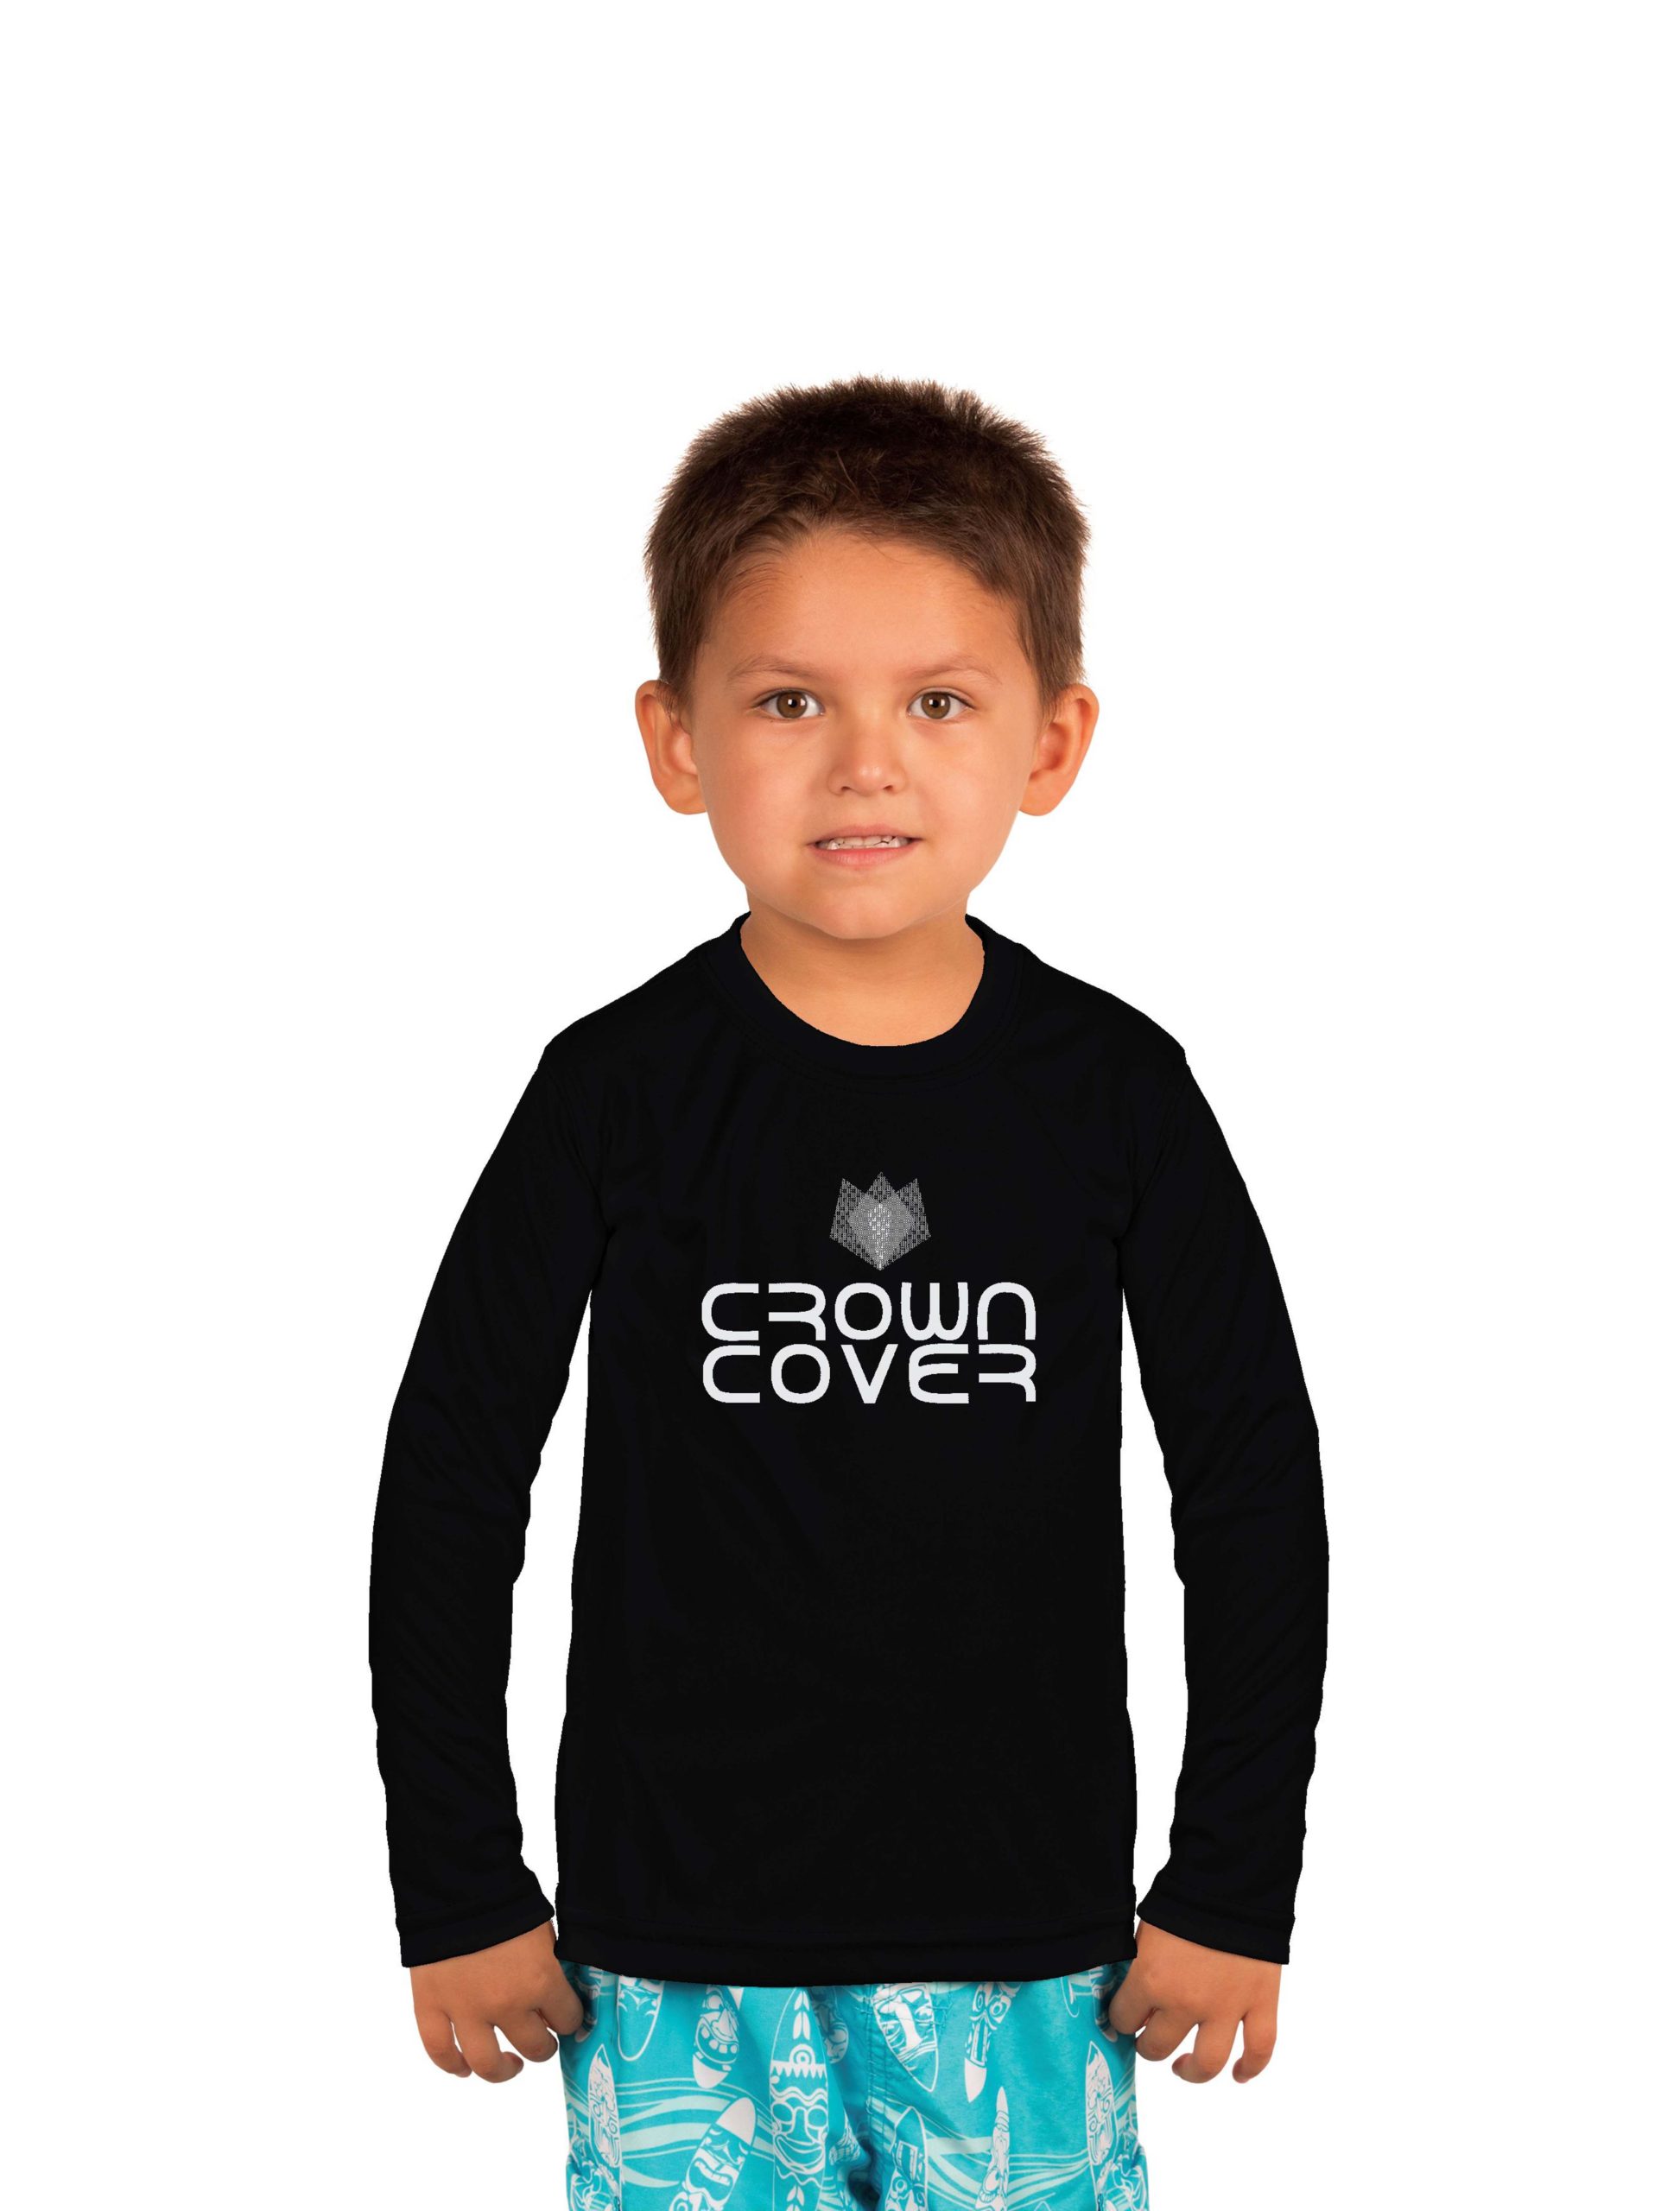 Toddler Long Sleeve Shirt – Black